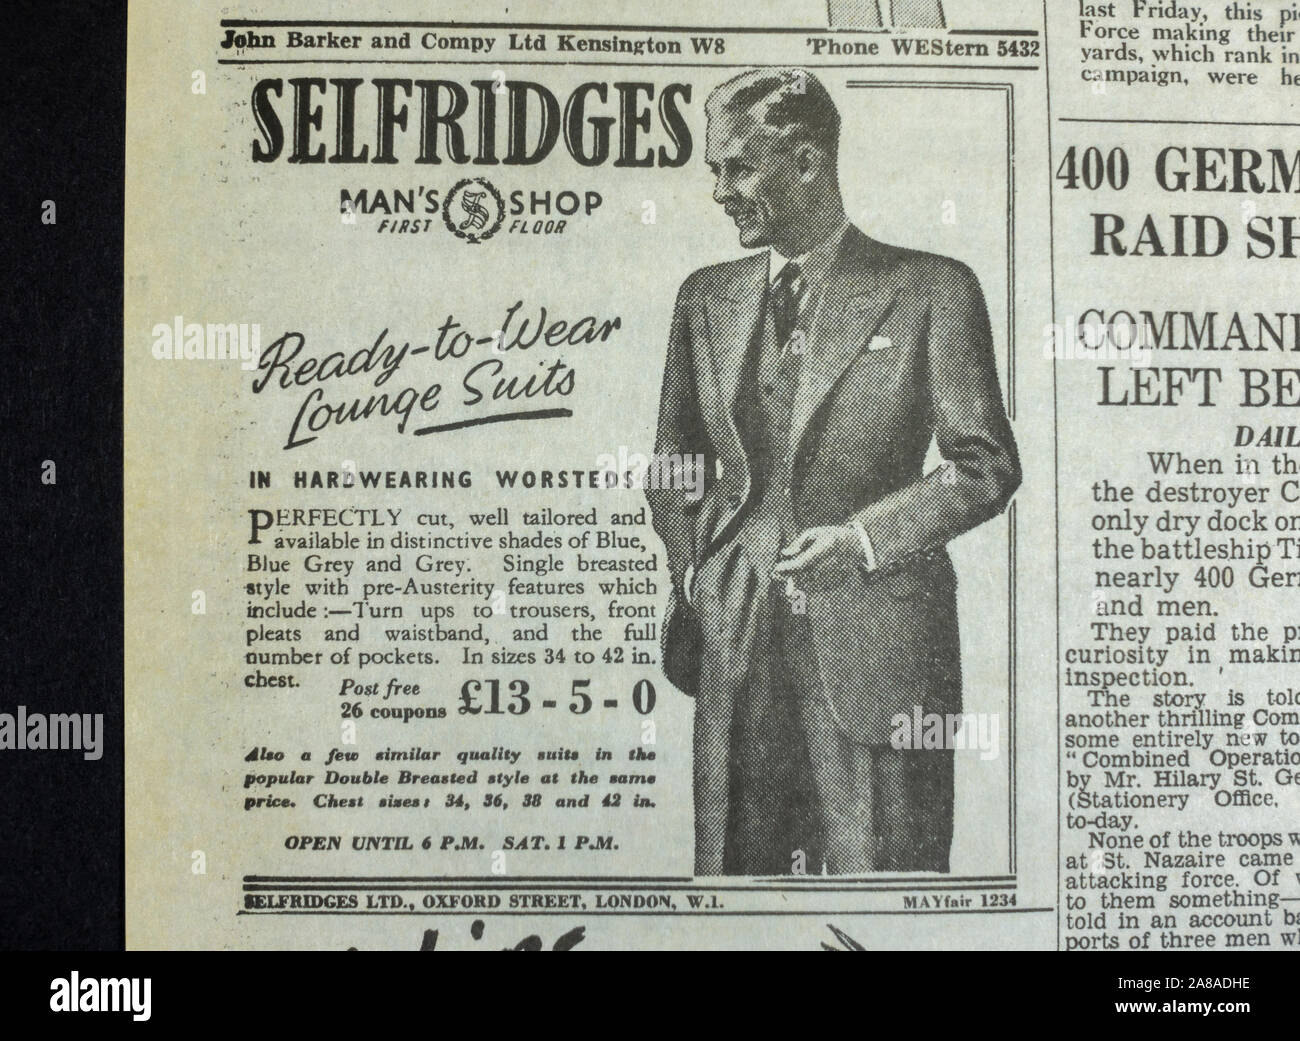 Anuncio de Selfridges de prêt-à-porter trajes lounge en el Daily Telegraph (réplica), 18 de mayo de 1943, el día después del Dam Busters raid. Foto de stock